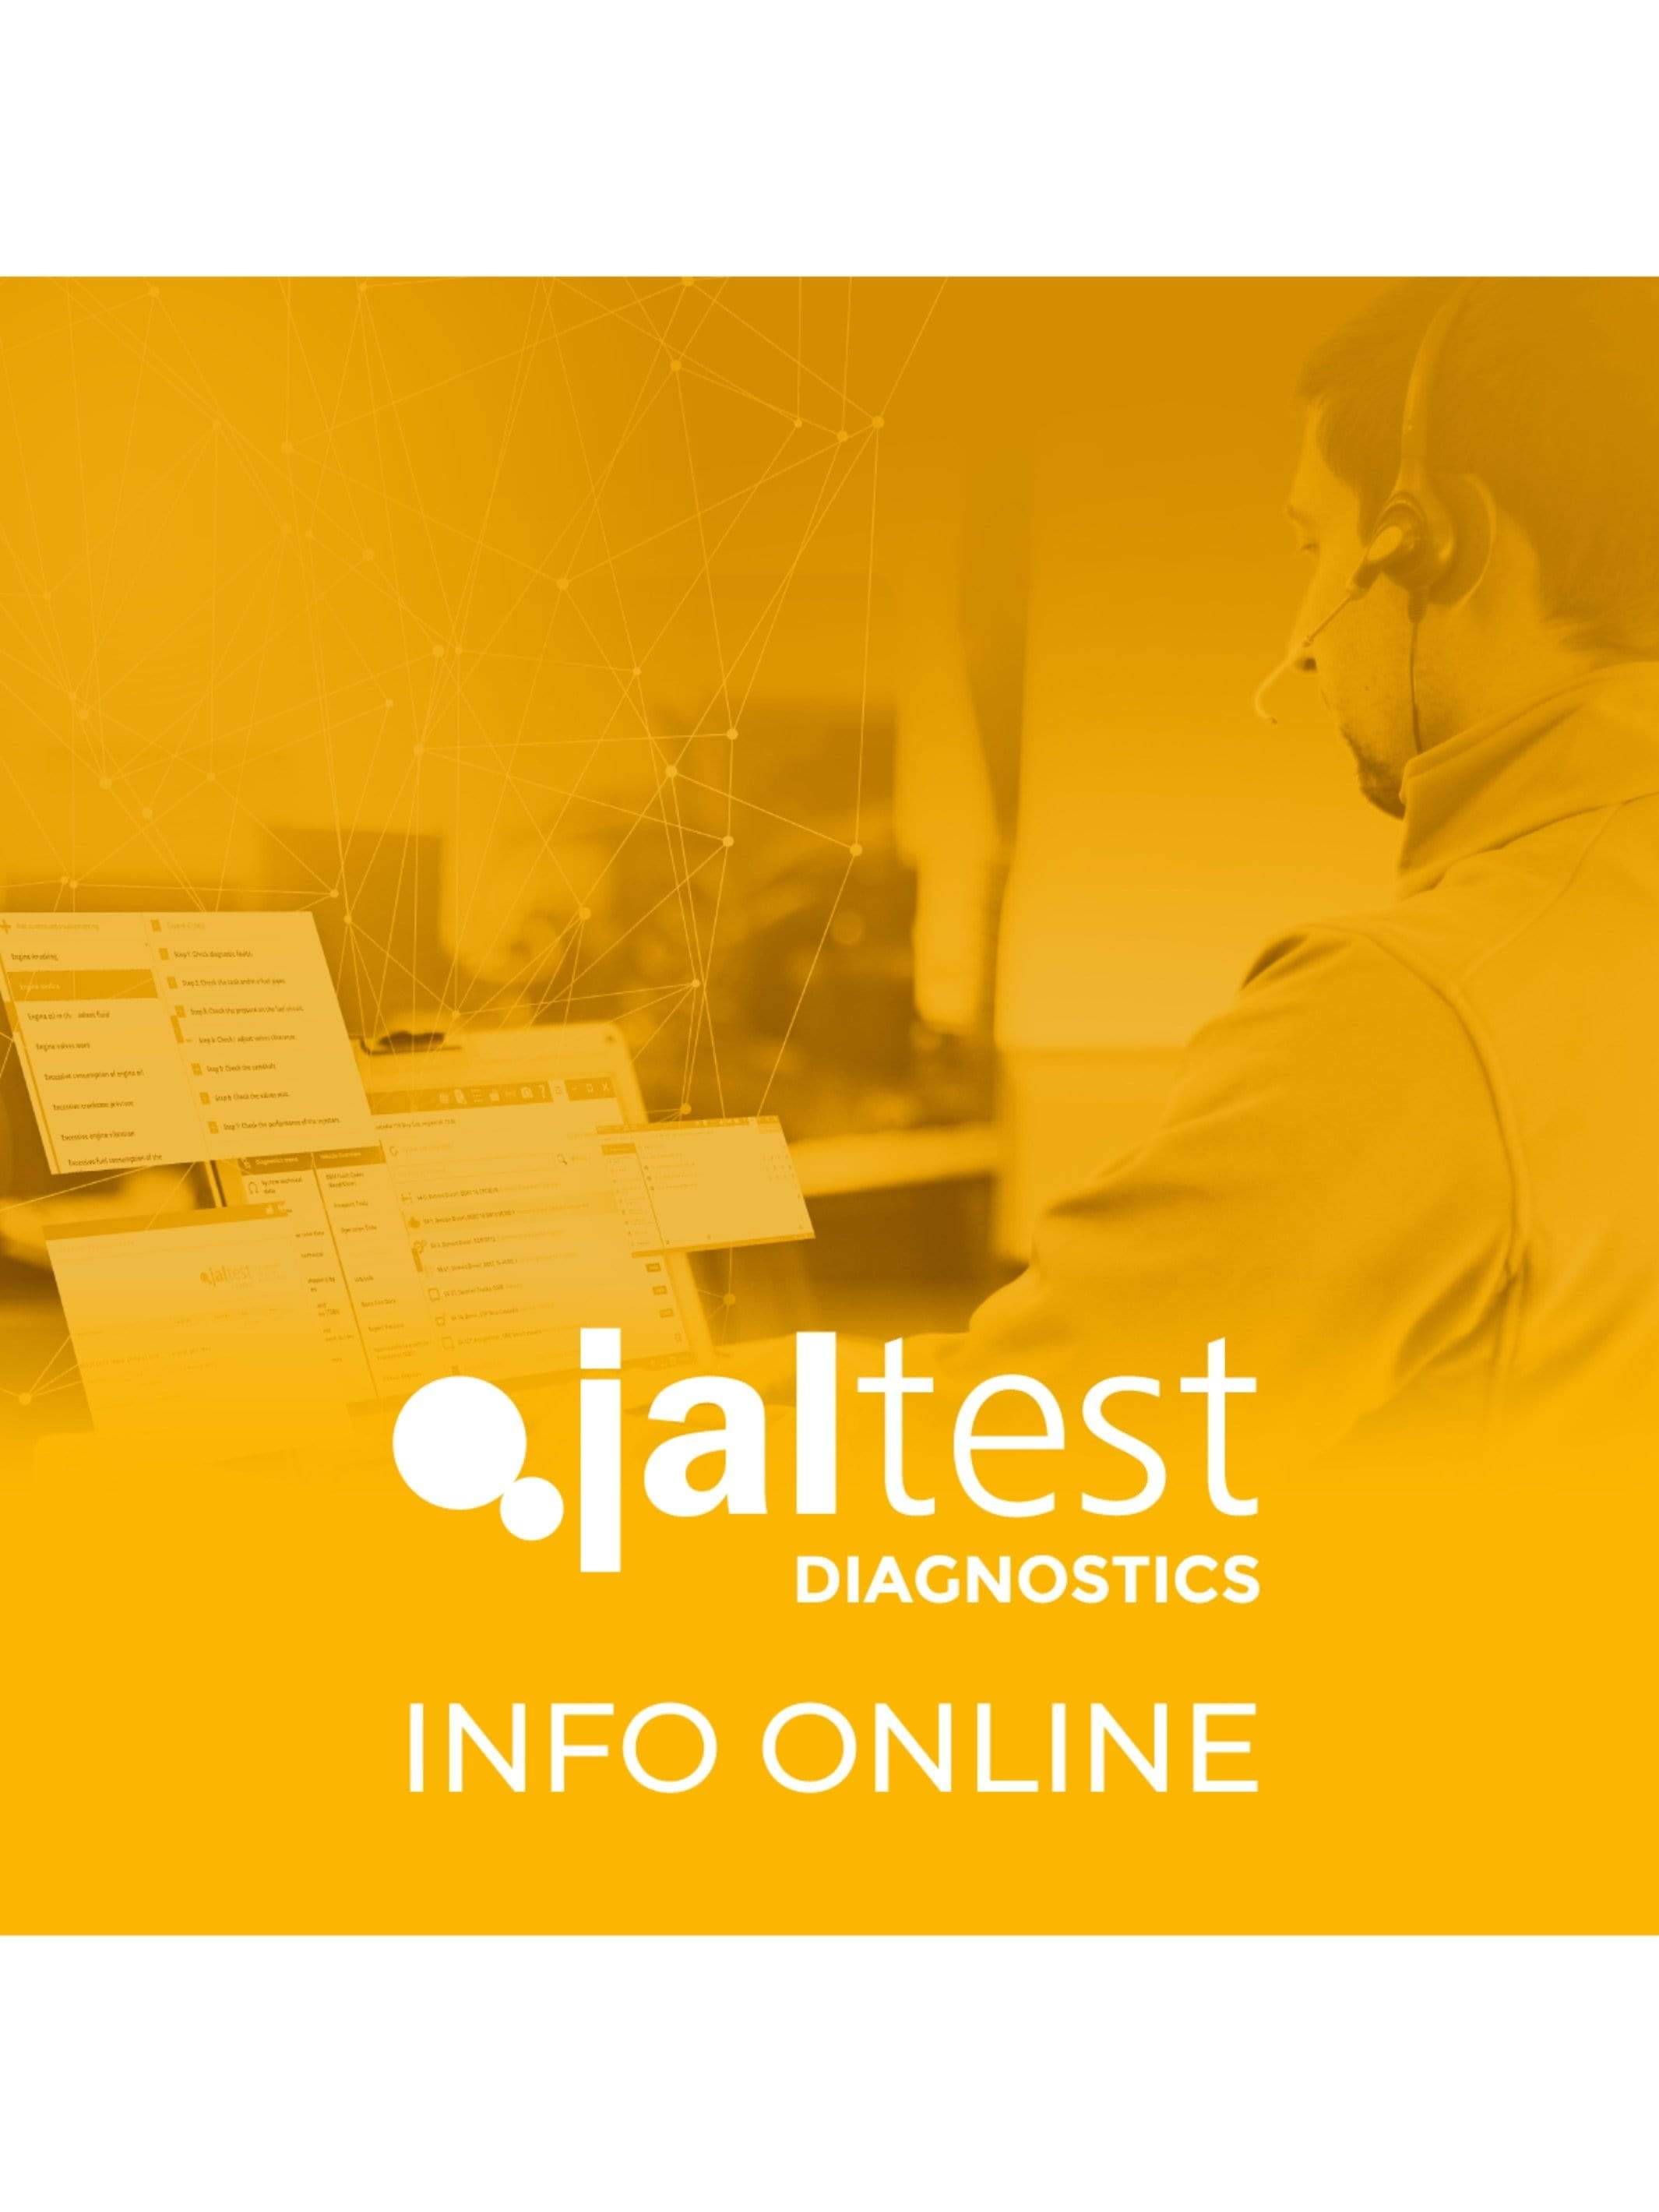 Jaltest OHW Diagnostics Info - Jaltest Diagnostic Computer Kit for Commercial Vehicle, Construction & Agriculture Equipment